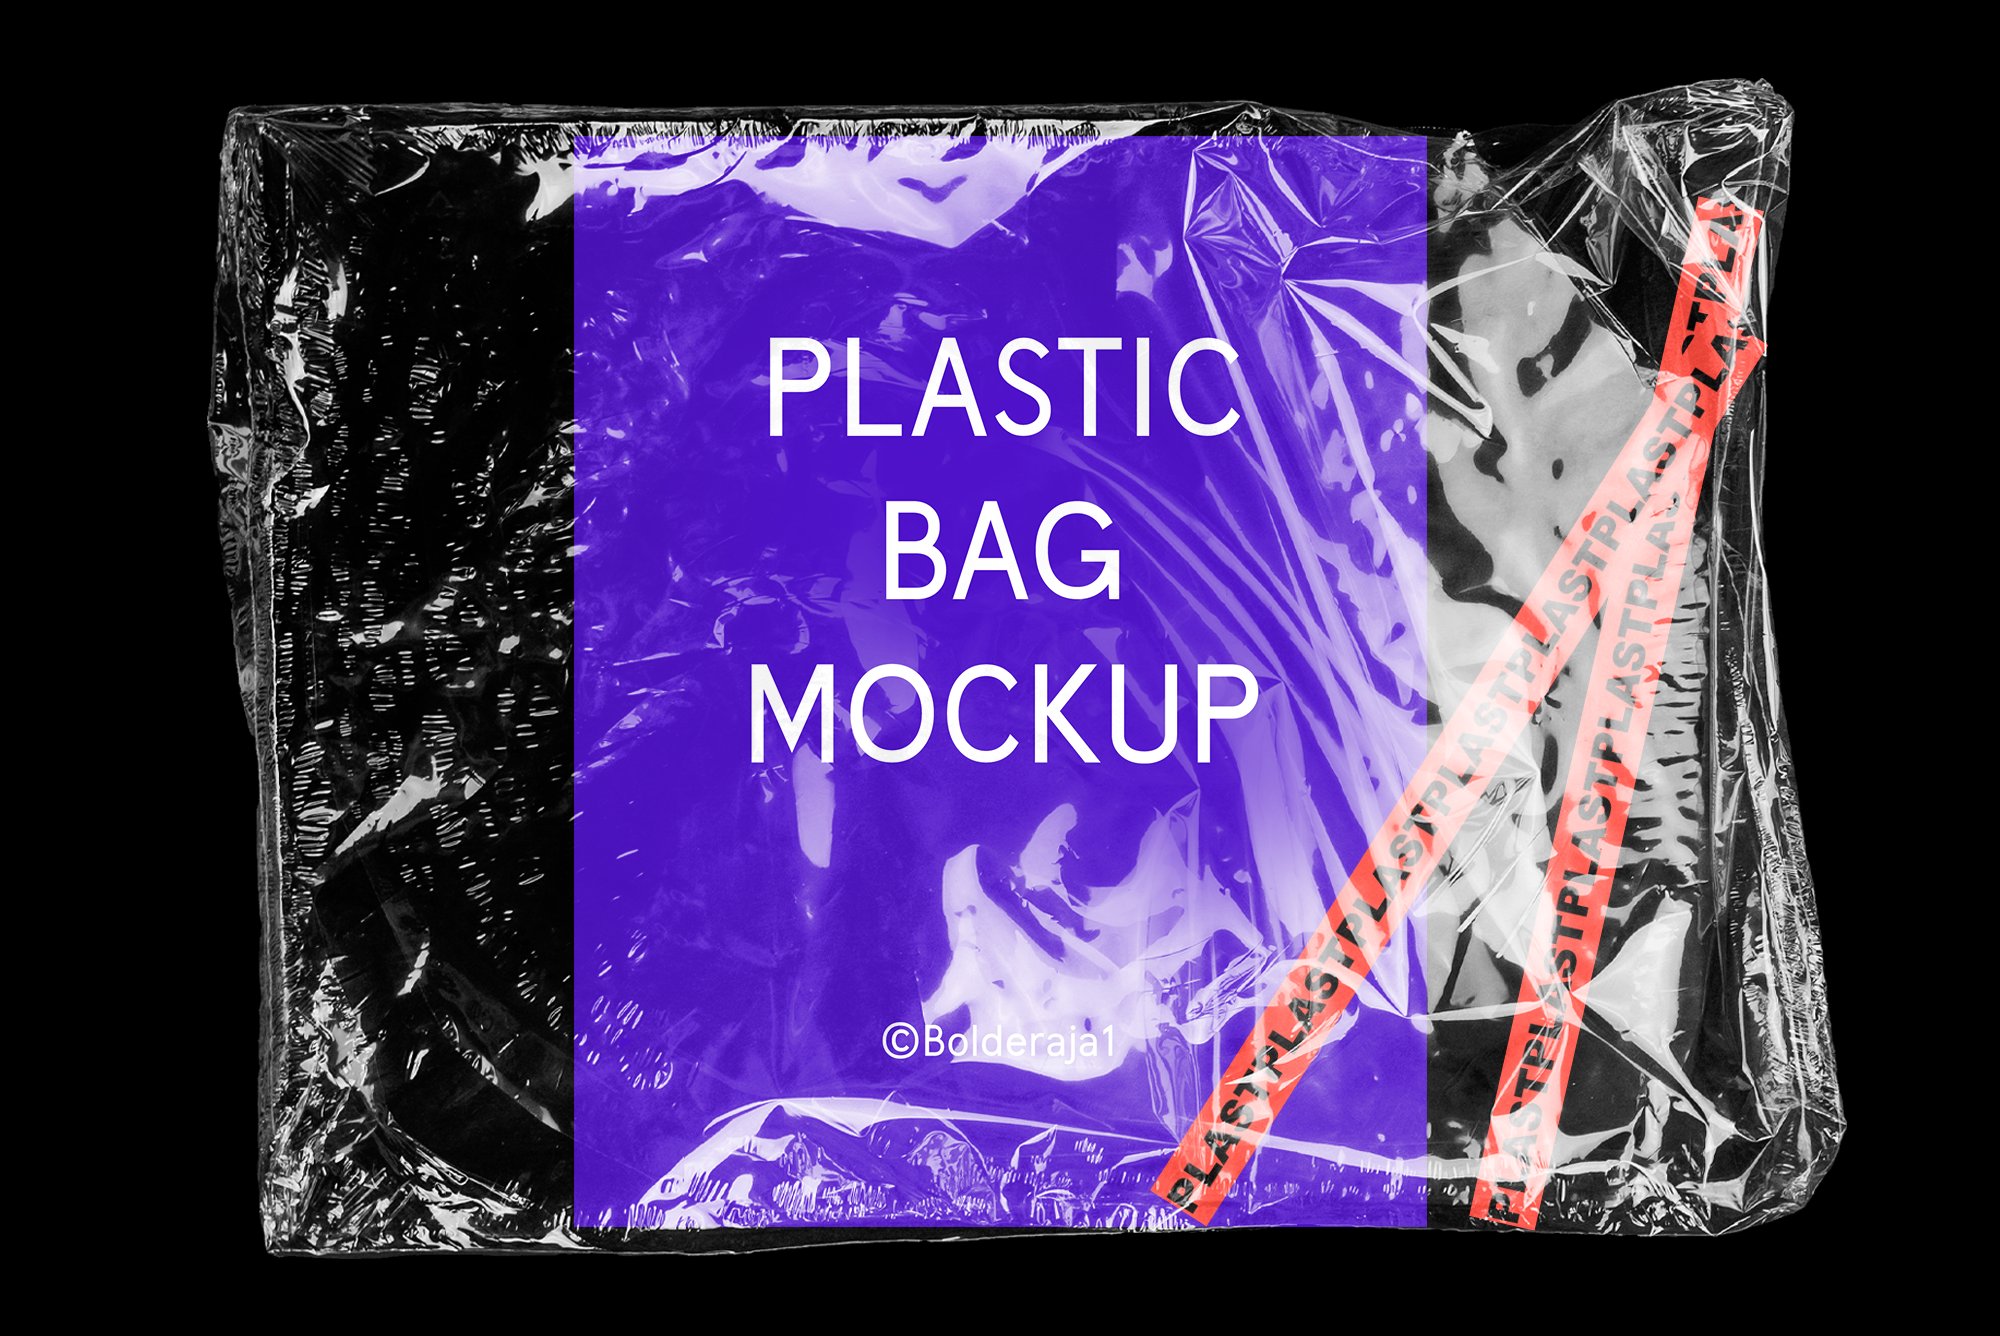 PLAST - Realistic Plastic Bag Mockup cover image.